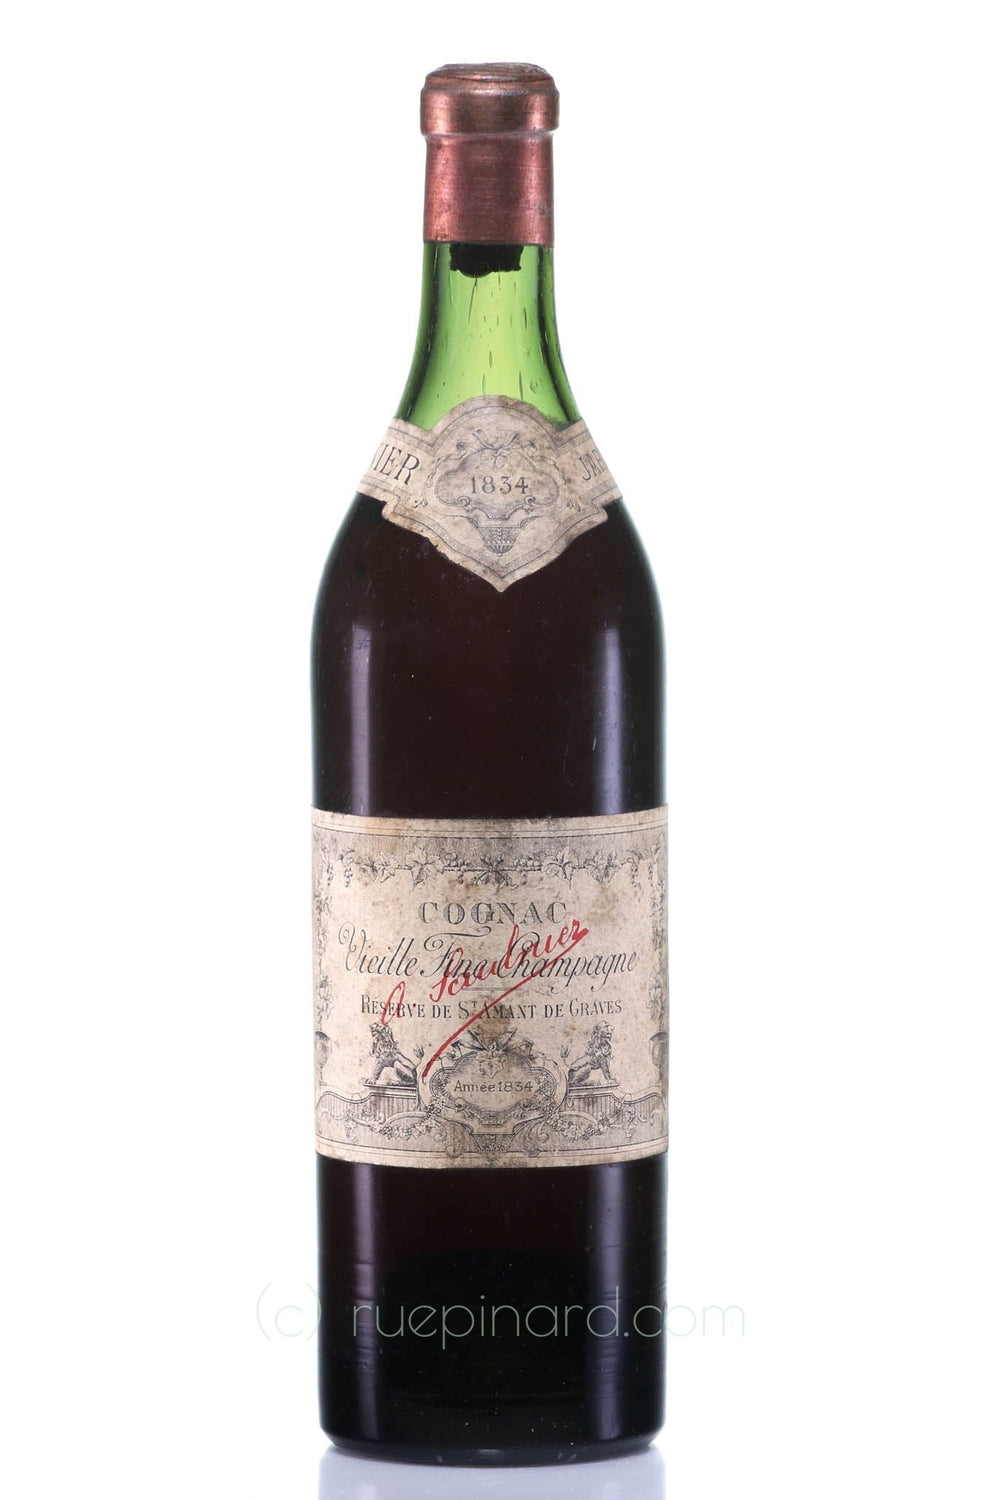 Raynal 1834 Fine Champagne Cognac by Saulnier Frères - Rue Pinard